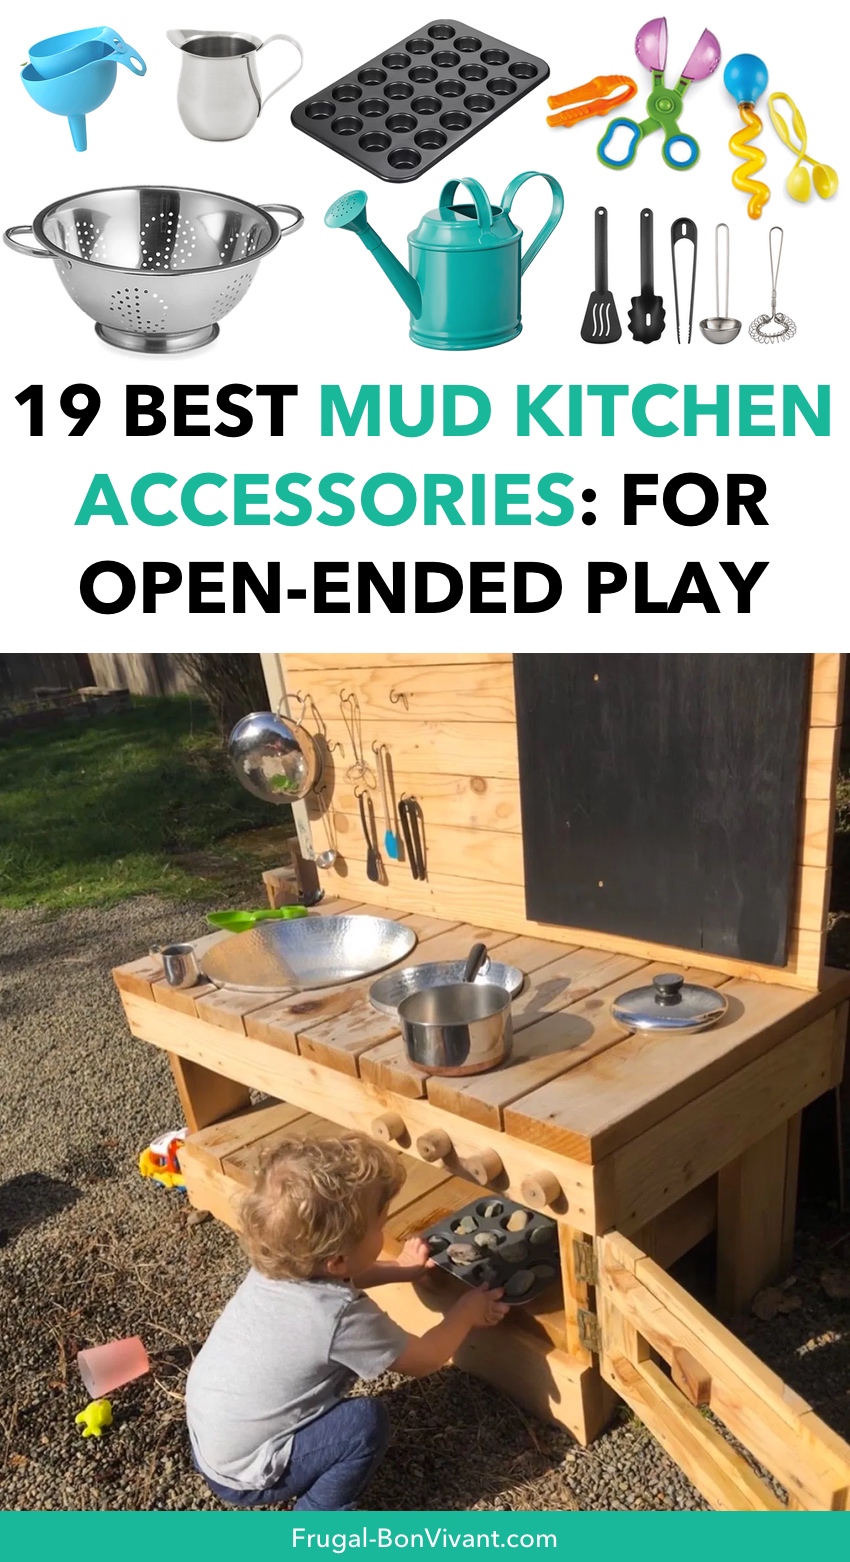 https://frugal-bonvivant.com/wp-content/uploads/2020/09/accessories-mud-kitchen.jpg